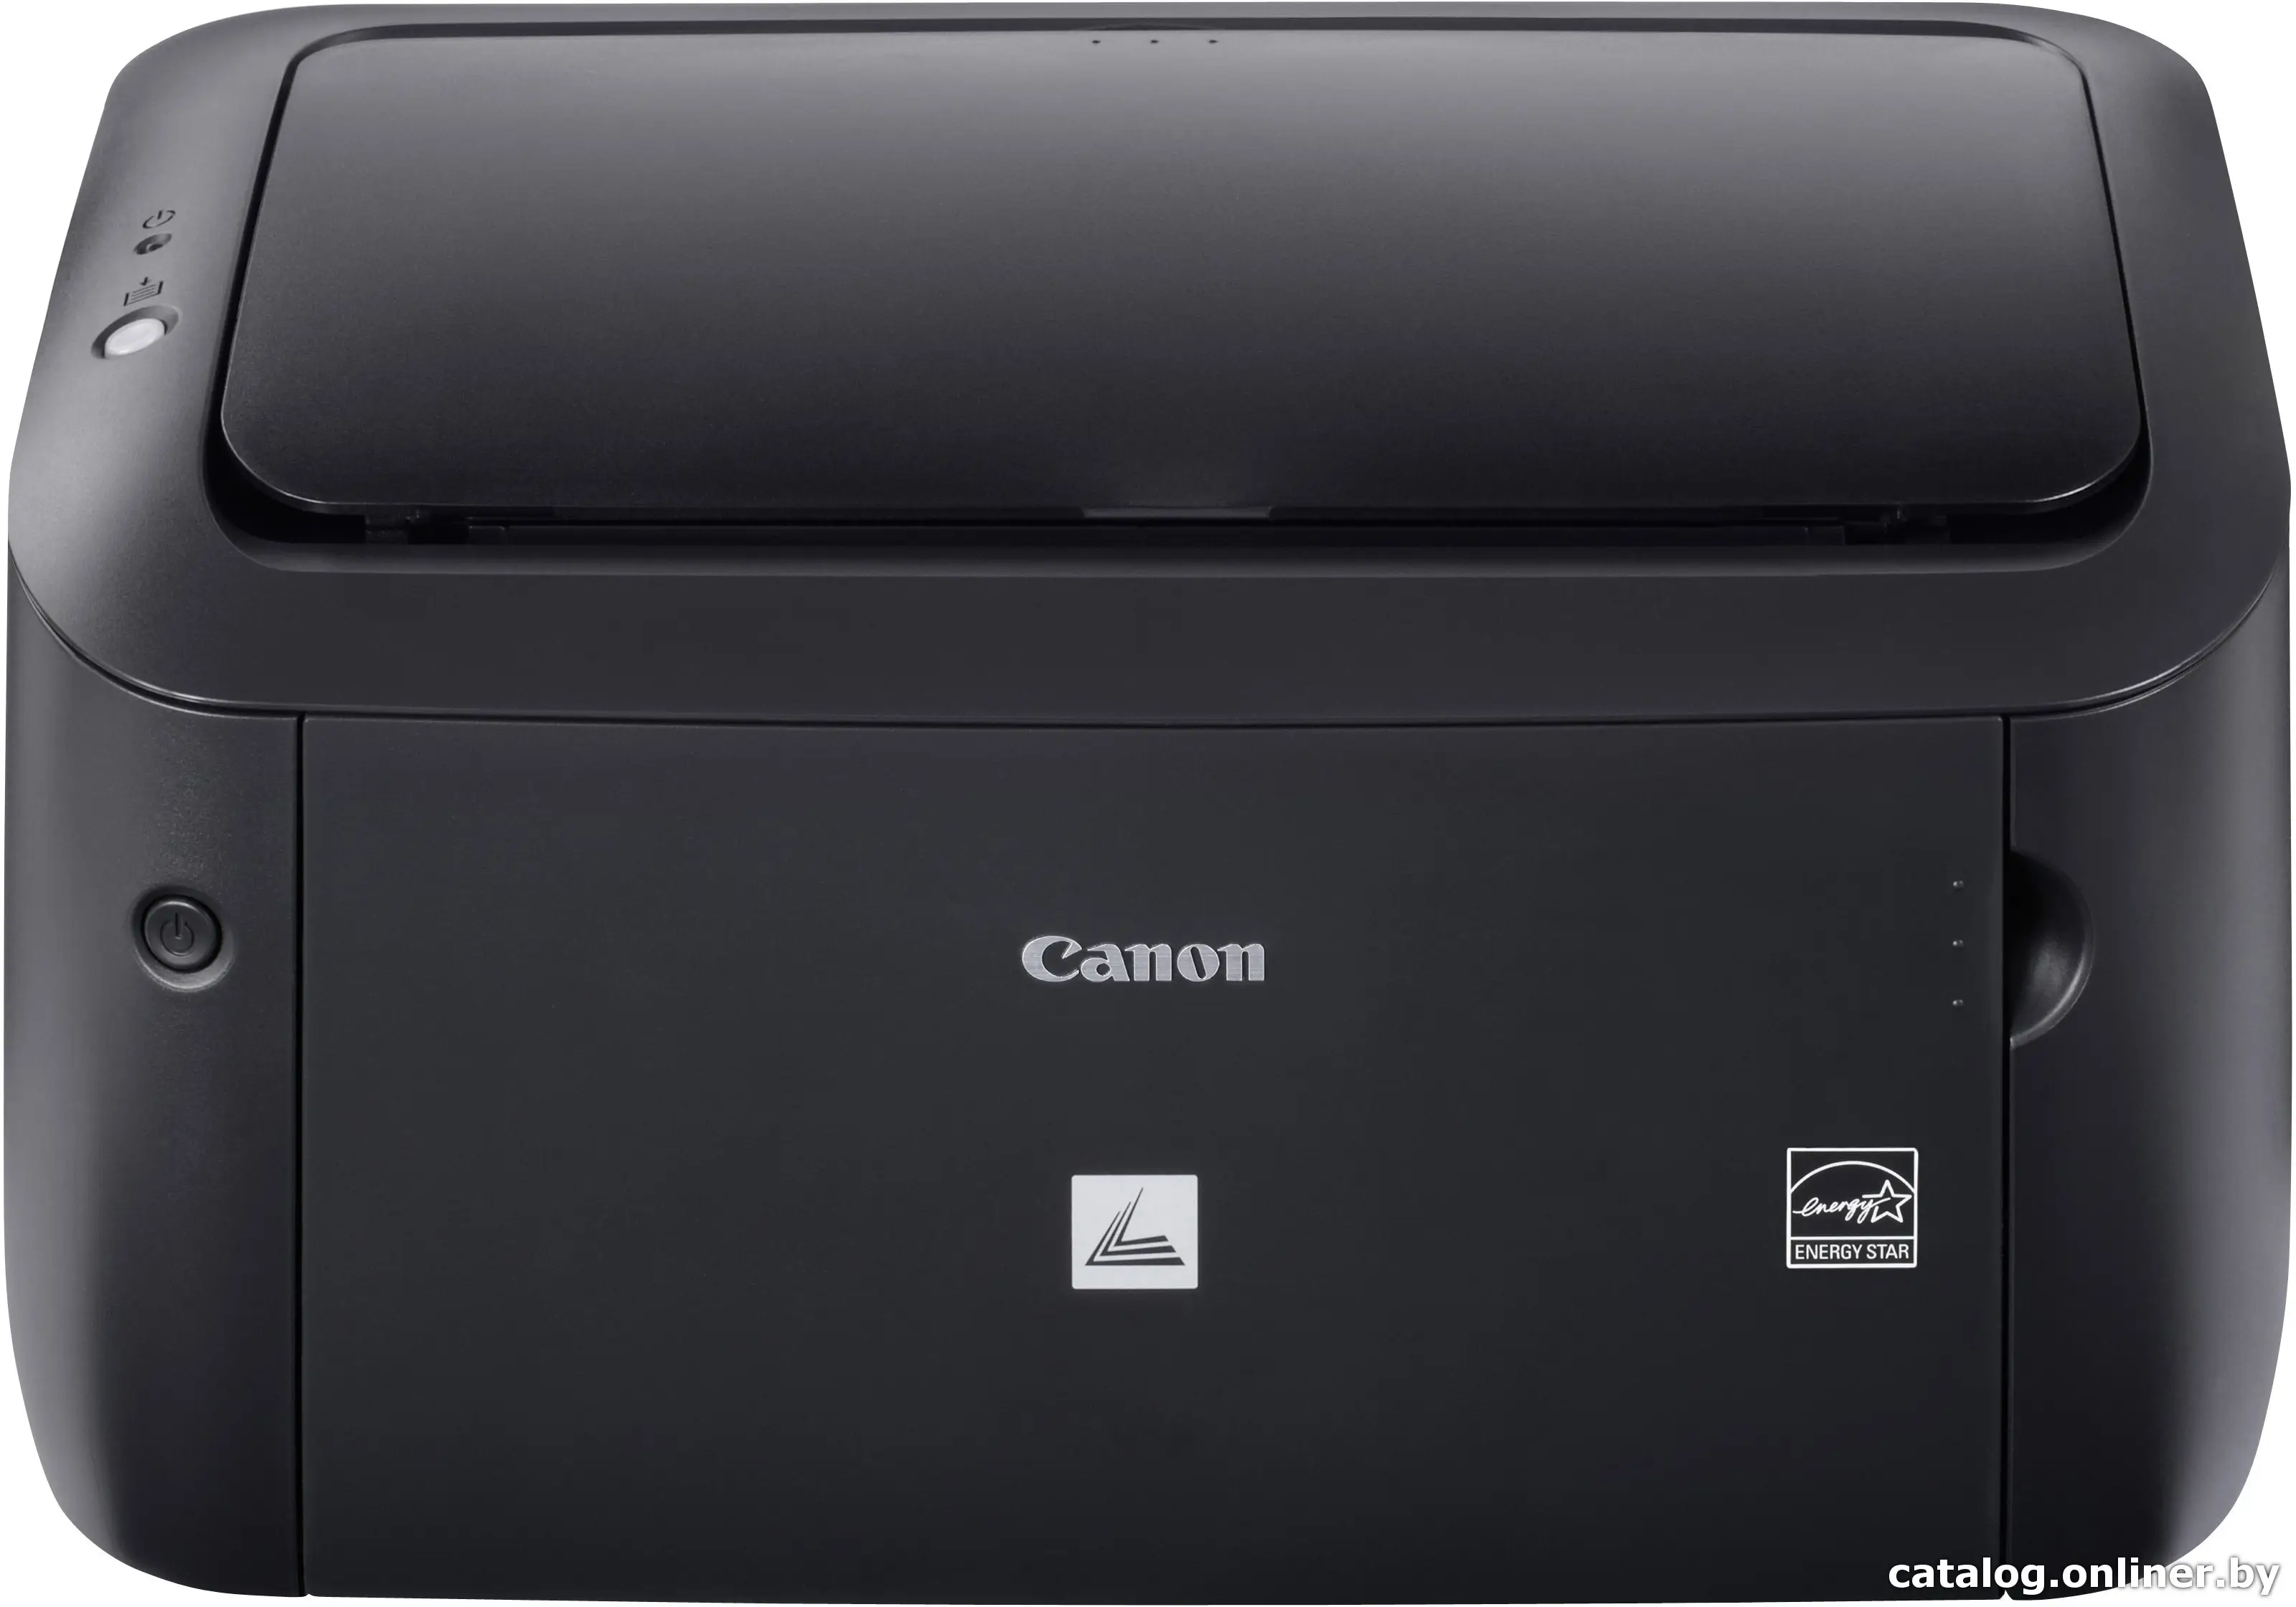 Купить Принтер Canon i-Sensys LBP6030B (8468B006), цена, опт и розница